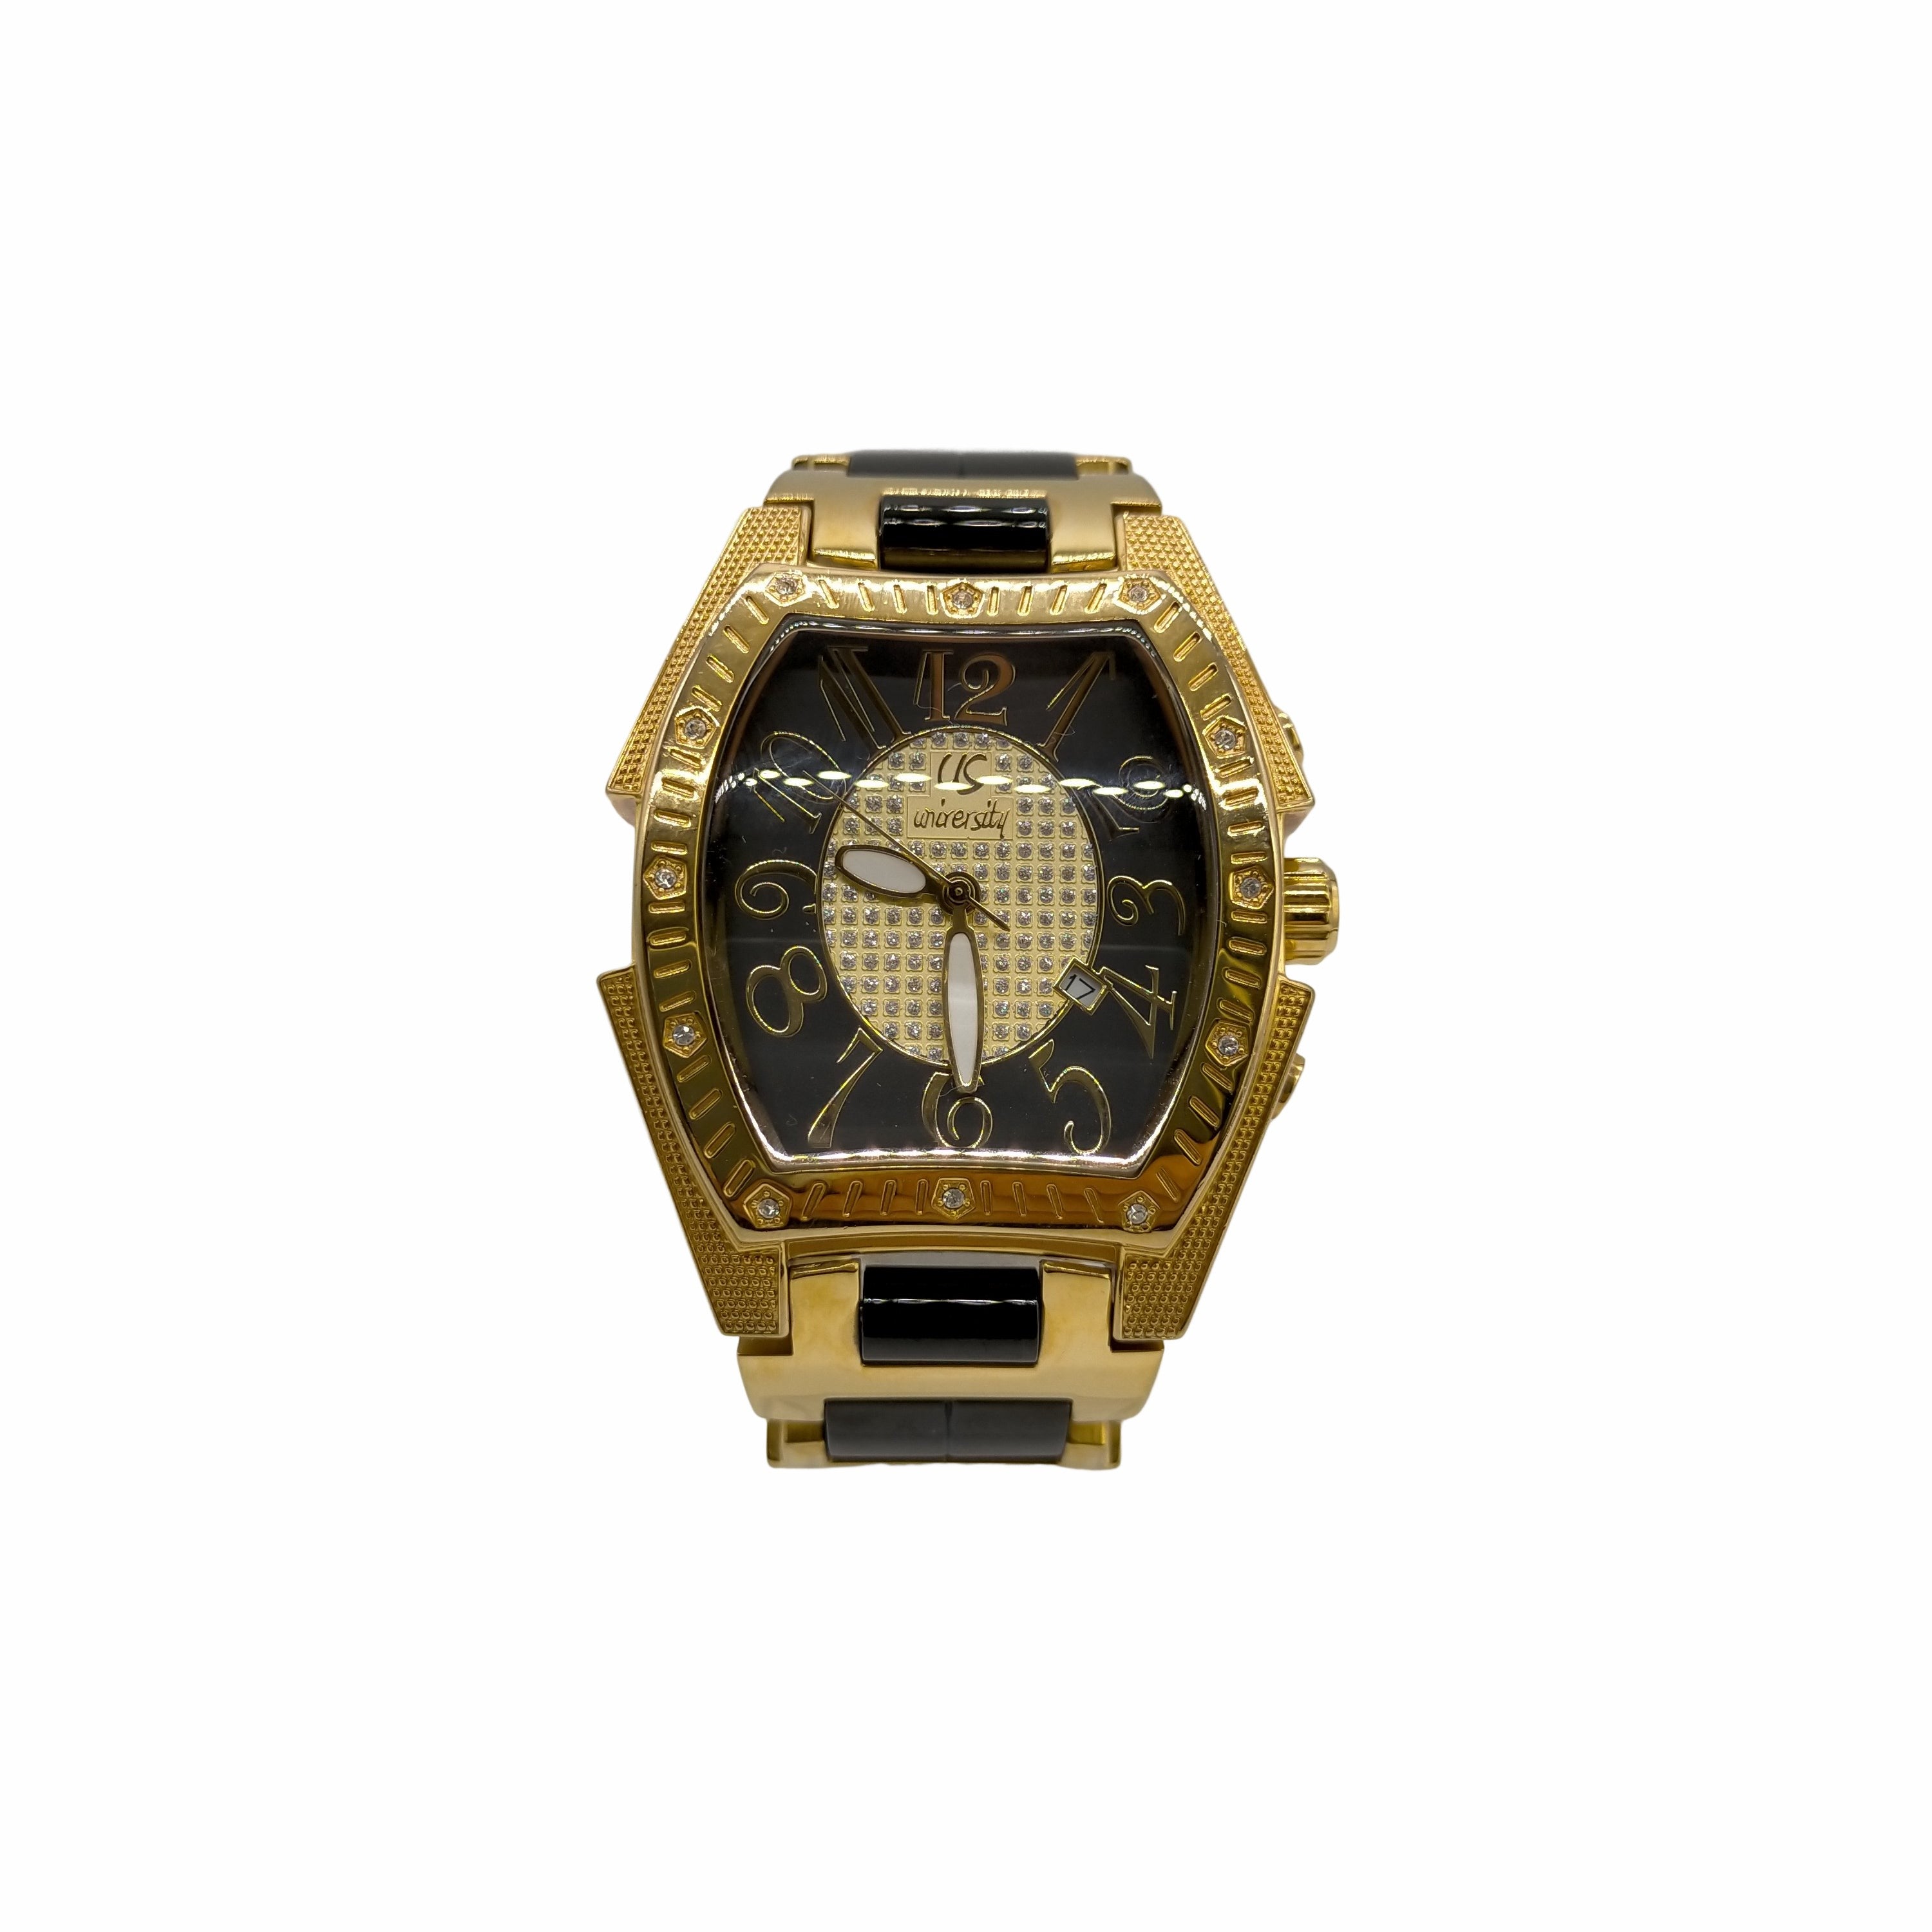 UNIVERSITY ビッグフェイス トノー型アナログ腕時計 メンズ – ブランド